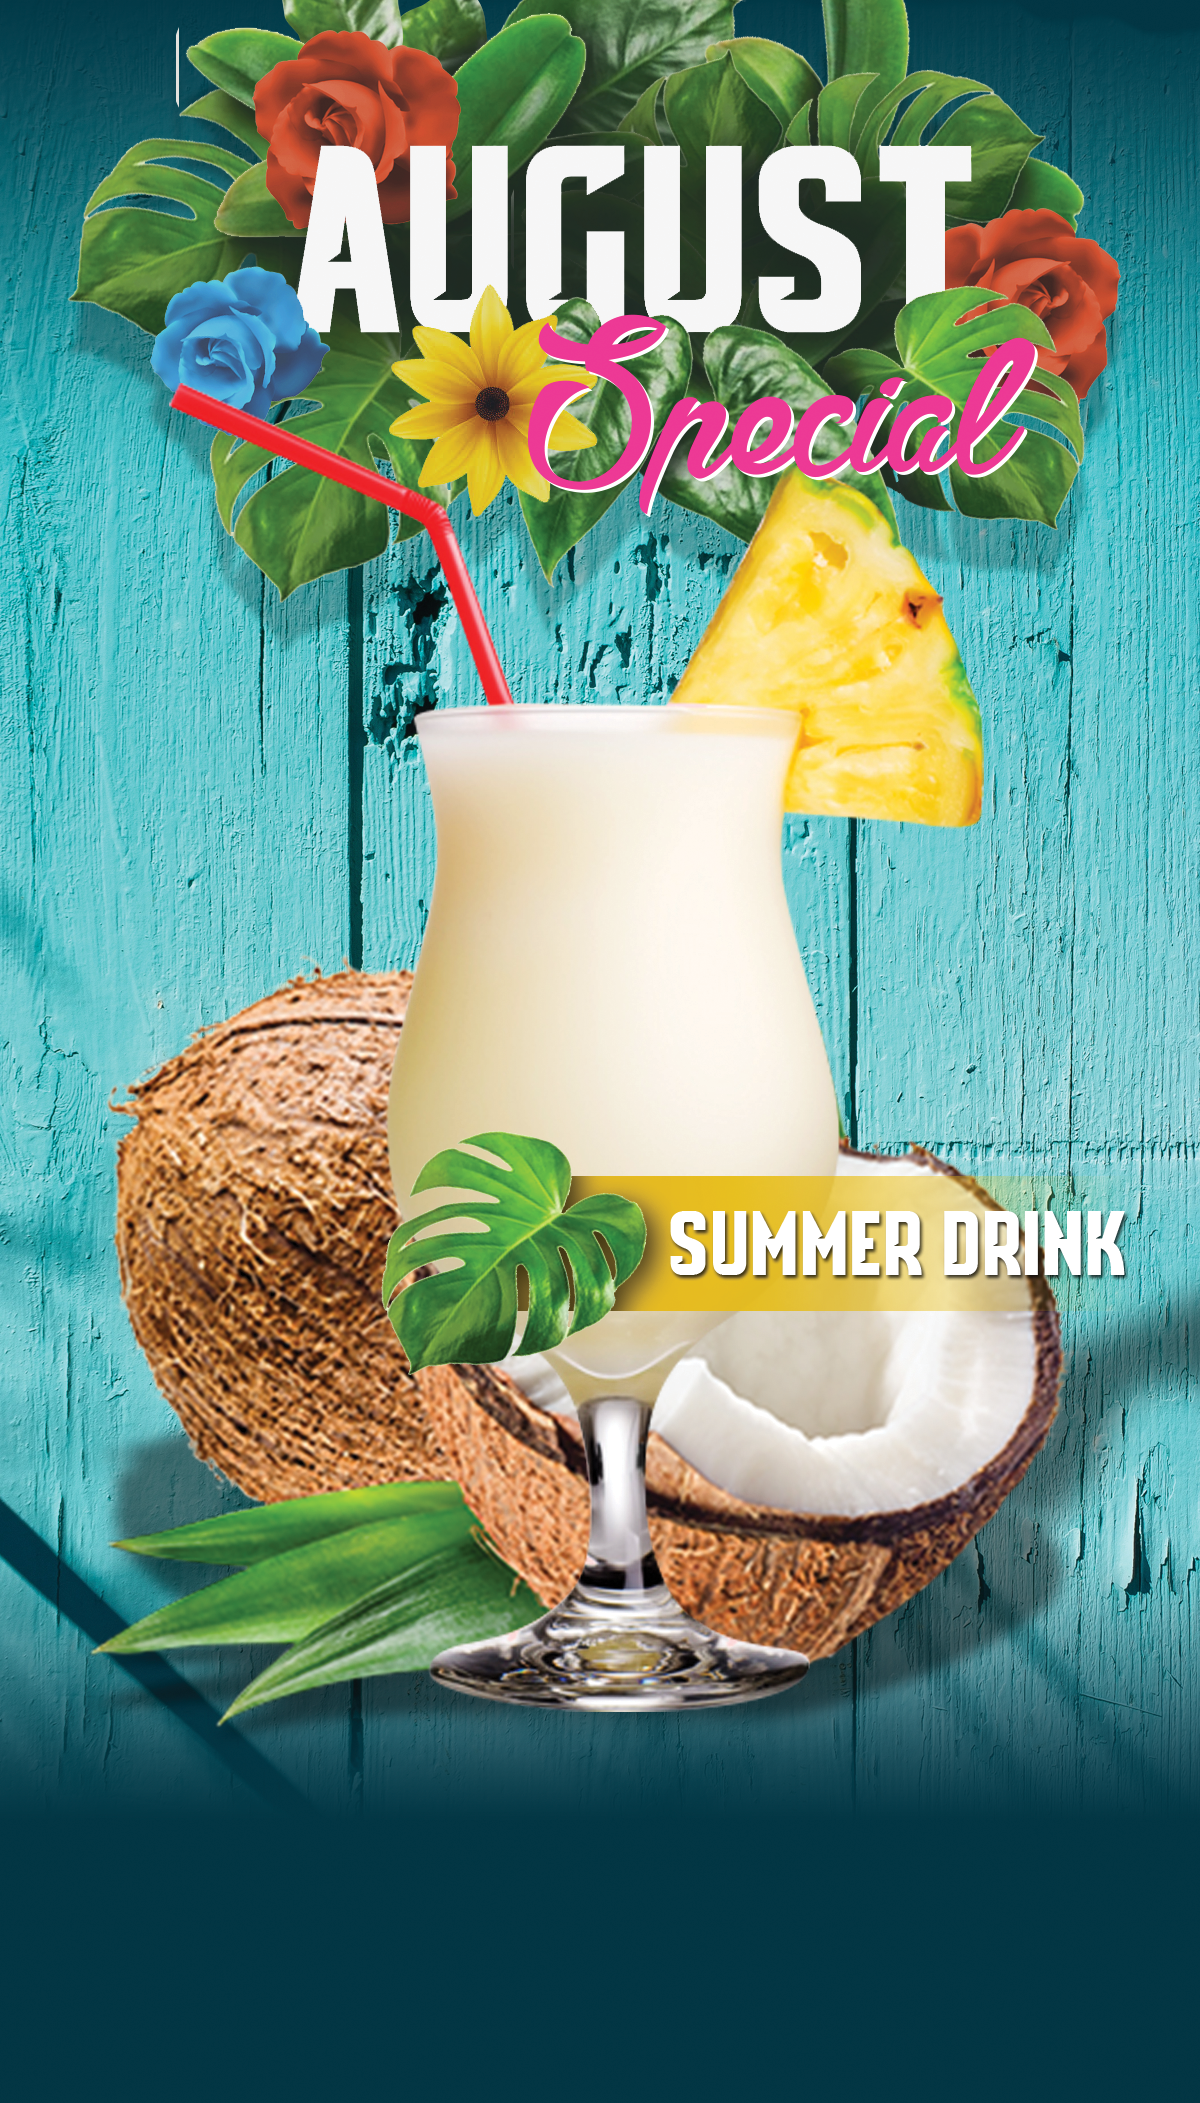 Summer Drink Promo